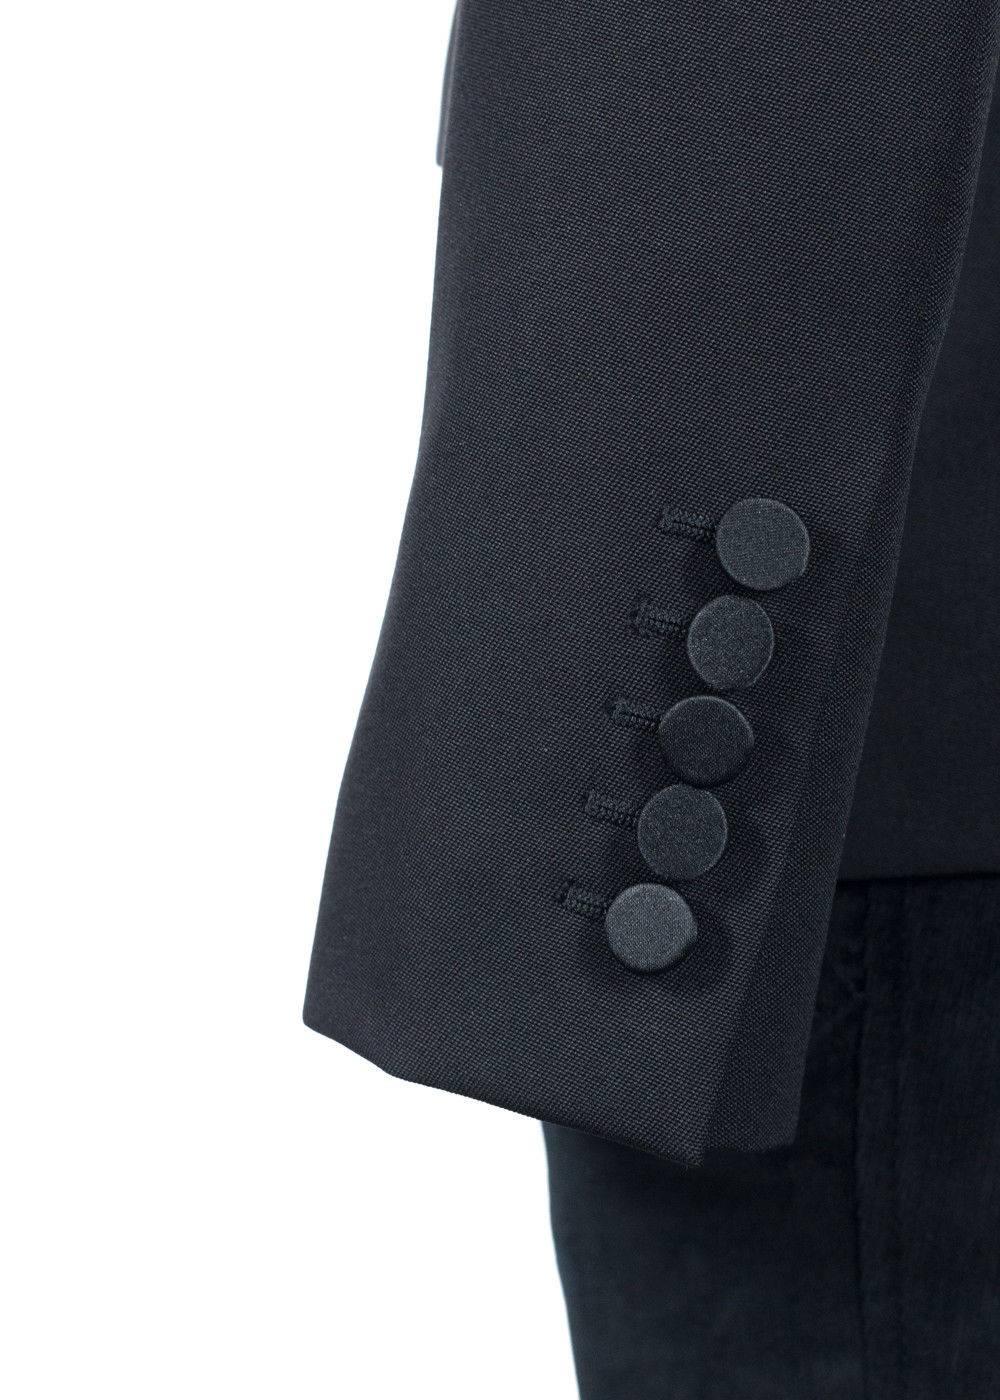 Women's Saint Laurent Womens Black One Button Wool Tuxedo Jacket